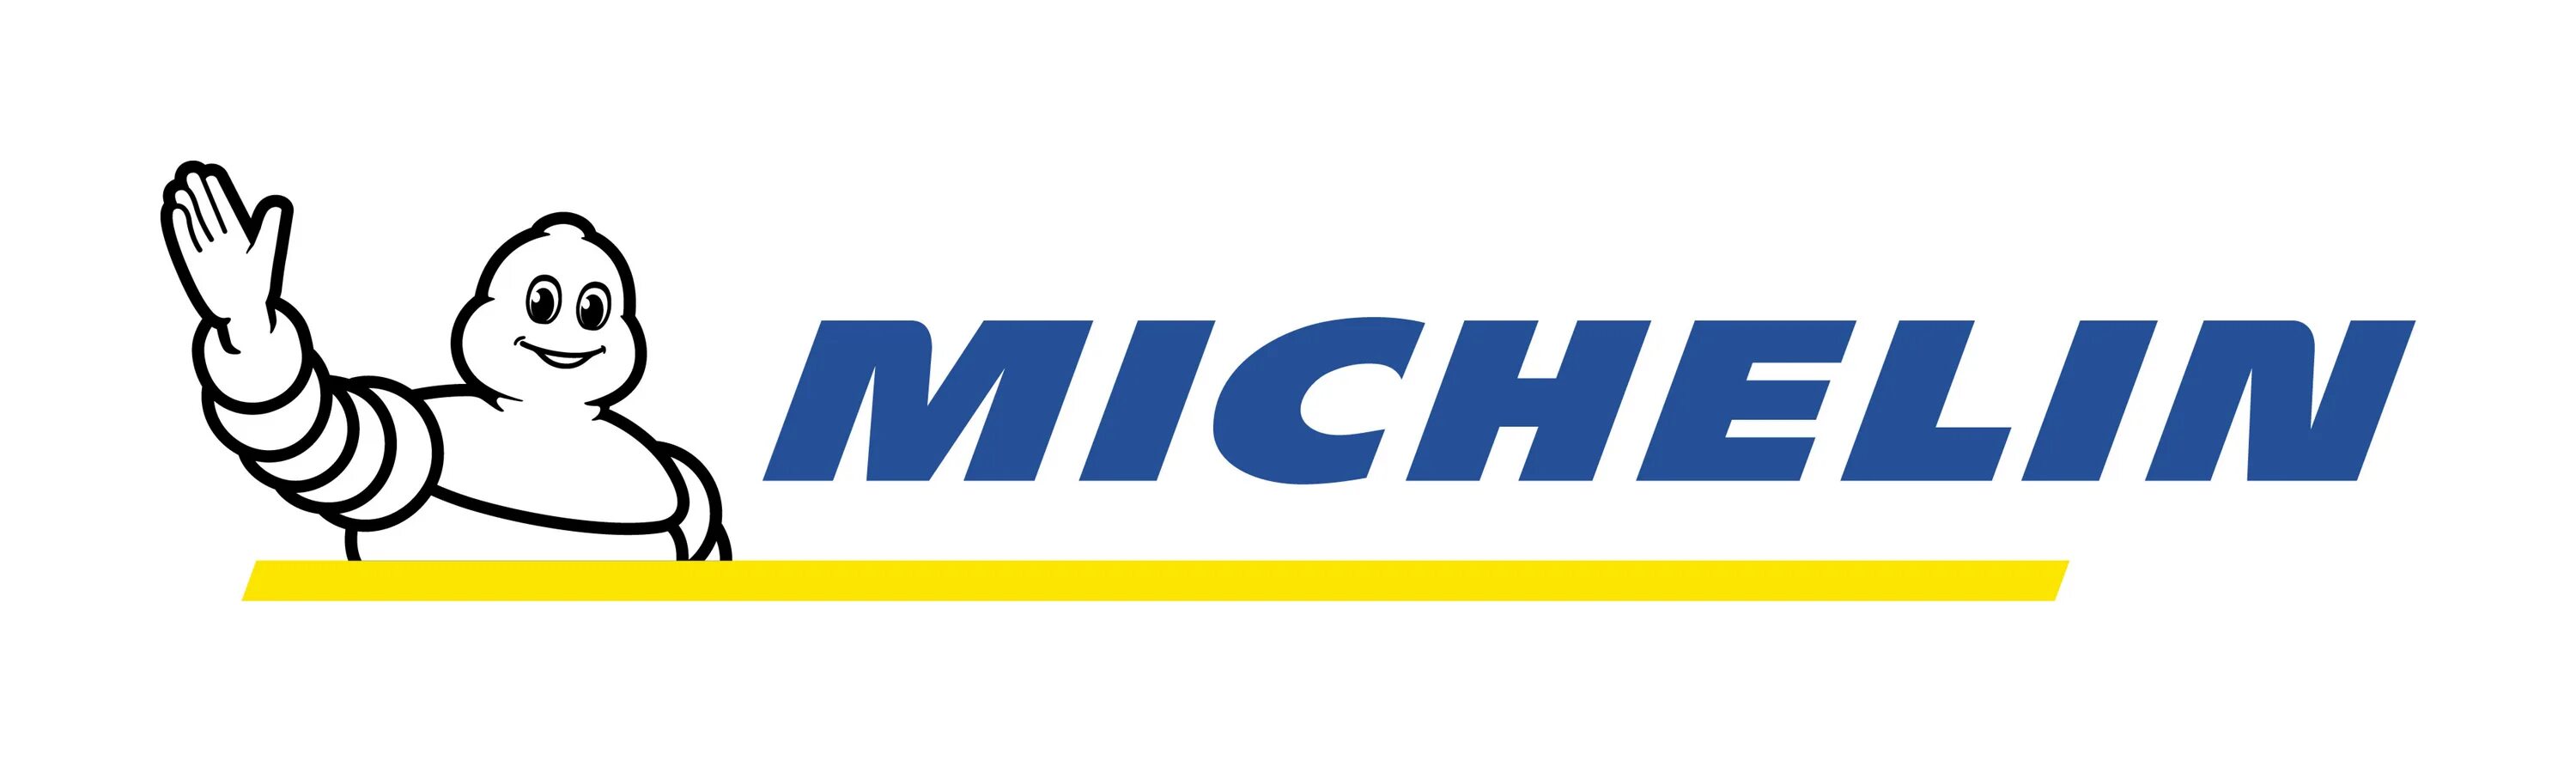 170 80 90 90. Michelin шины лого. Michelin логотип. Michelin шины PNG. Michelin логотип вектор.